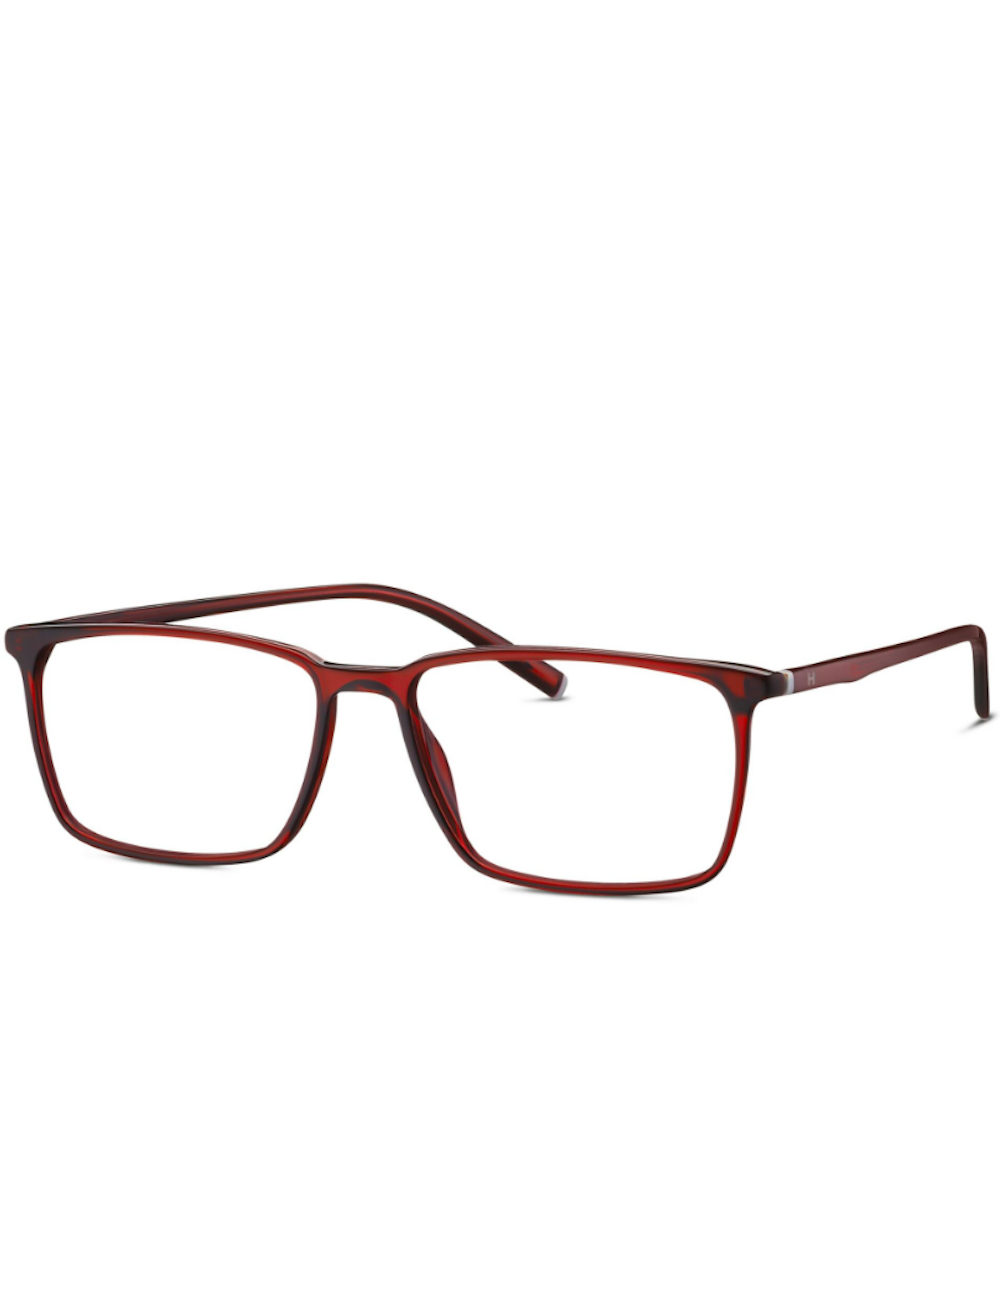 Humphrey's eyewear 583127 50 rectangular eyeglasses